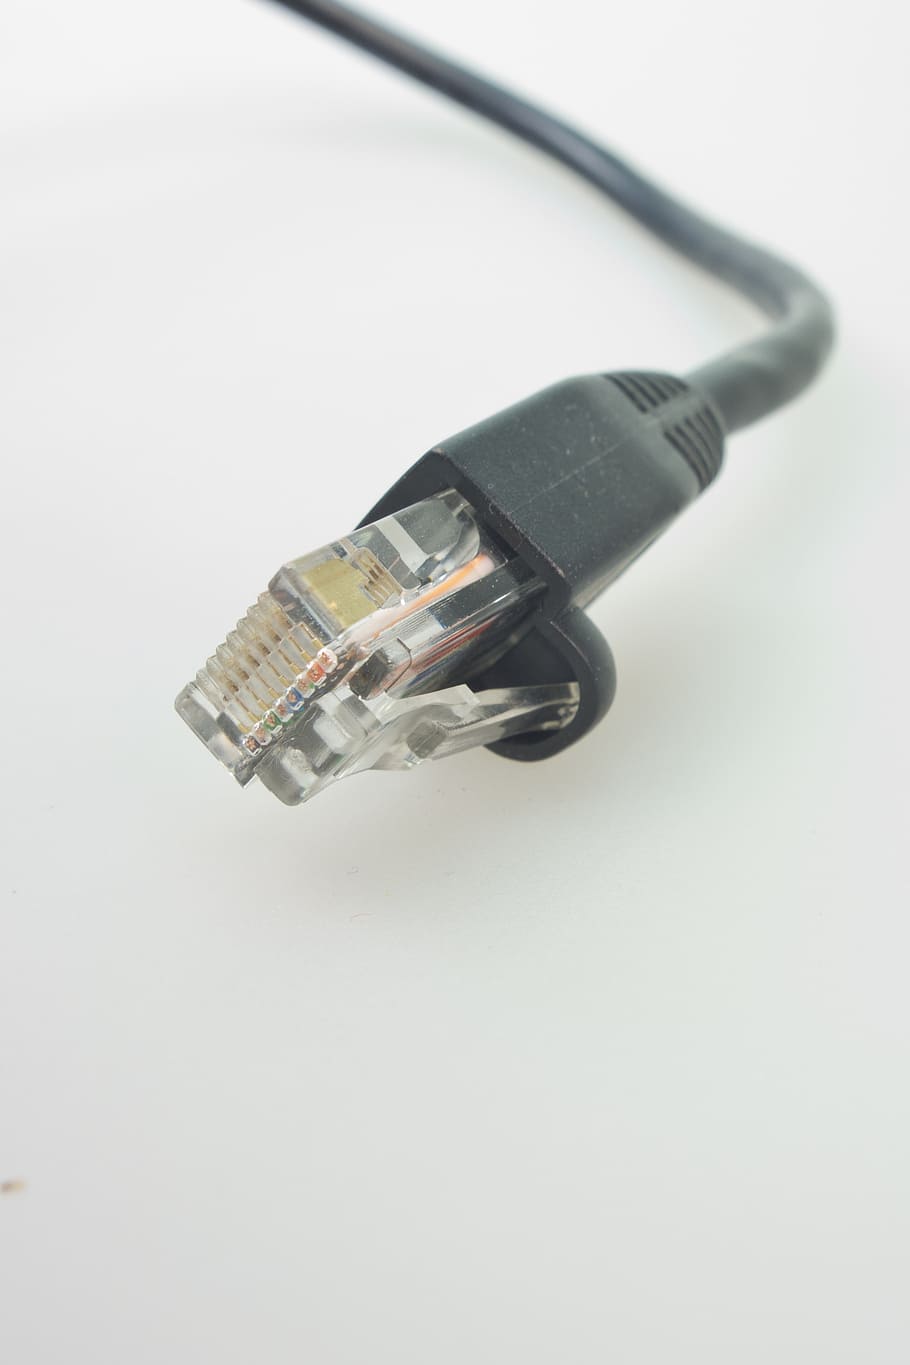 cables de red, rj, enchufe, cable de conexión, red, cable, línea, fs, procesamiento de datos, rj-45